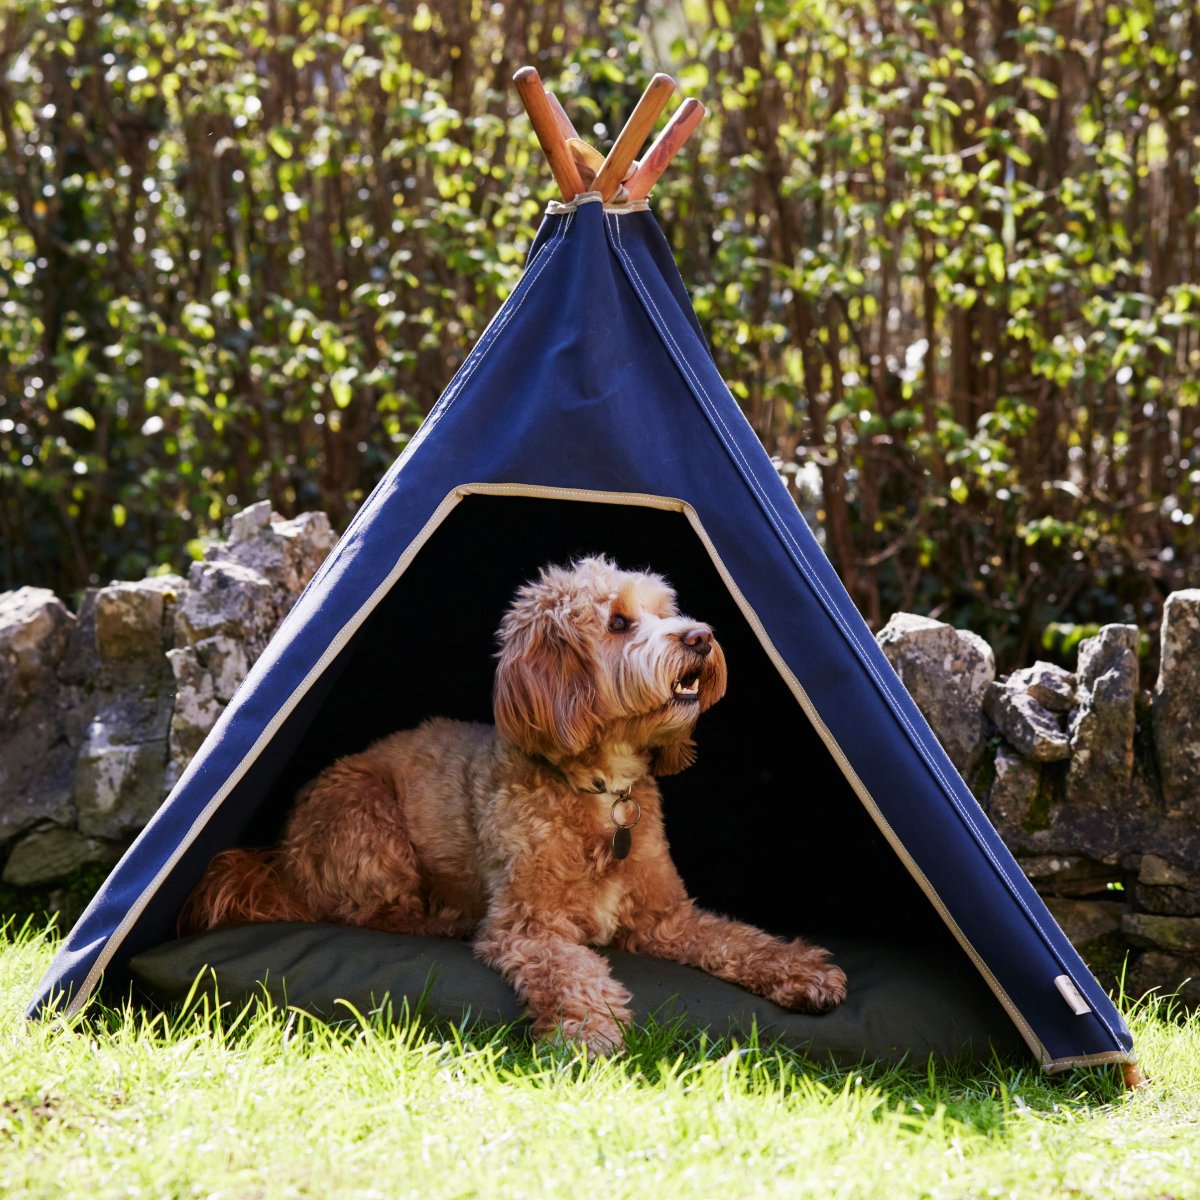 Dog sun shade. Dog in a teepee providing shade outdoors in garden 